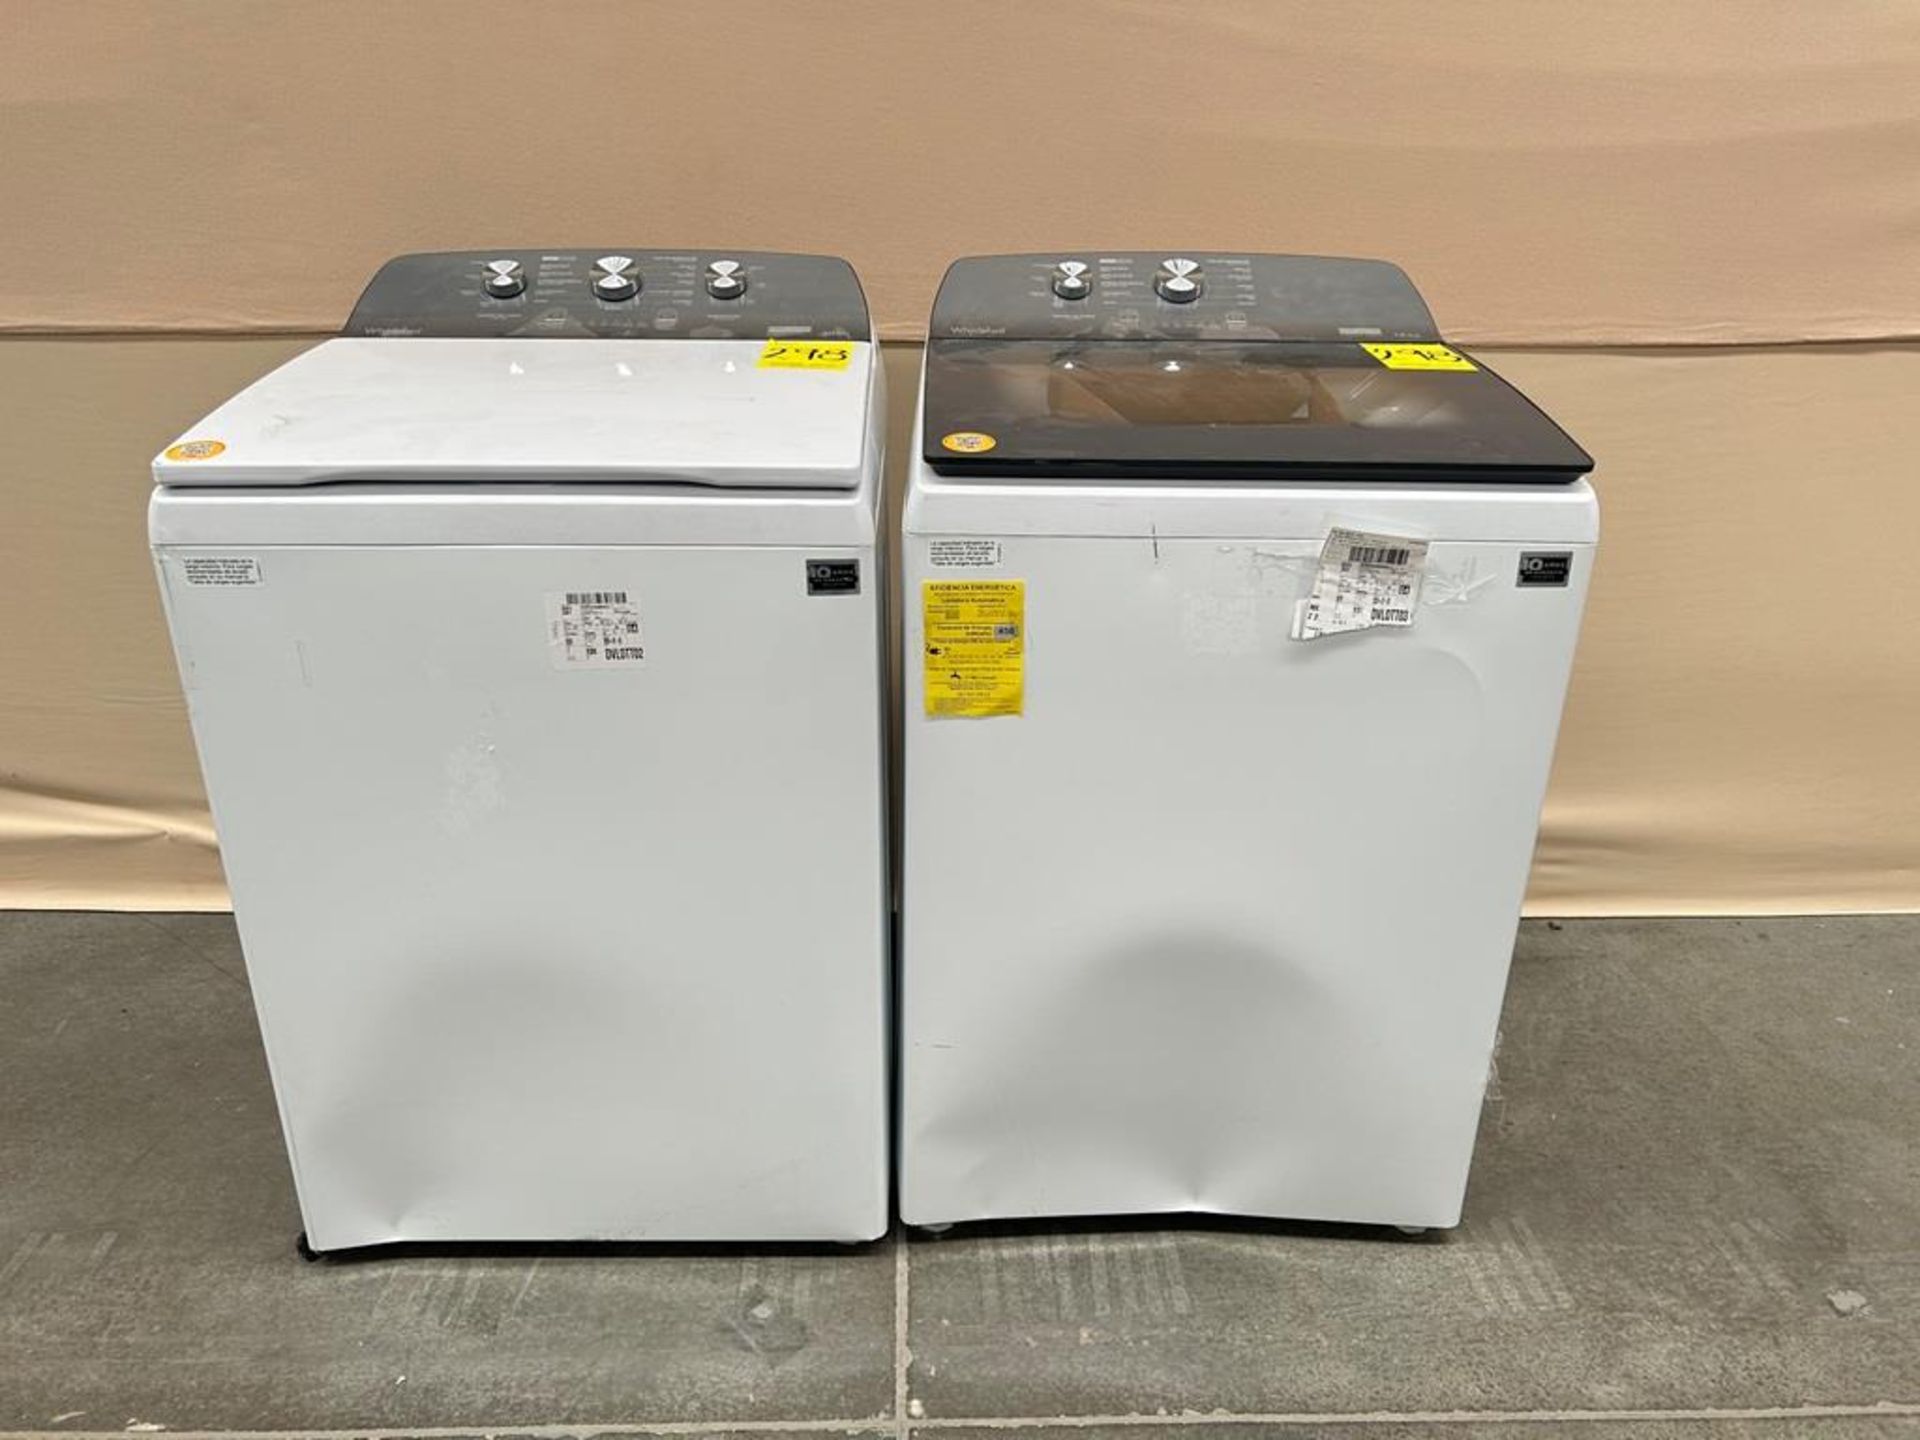 Lote de 2 lavadoras contiene: 1 Lavadora de 18KG Marca WHIRPOOL, Modelo 8MWTW1813MJM1, Serie 197399